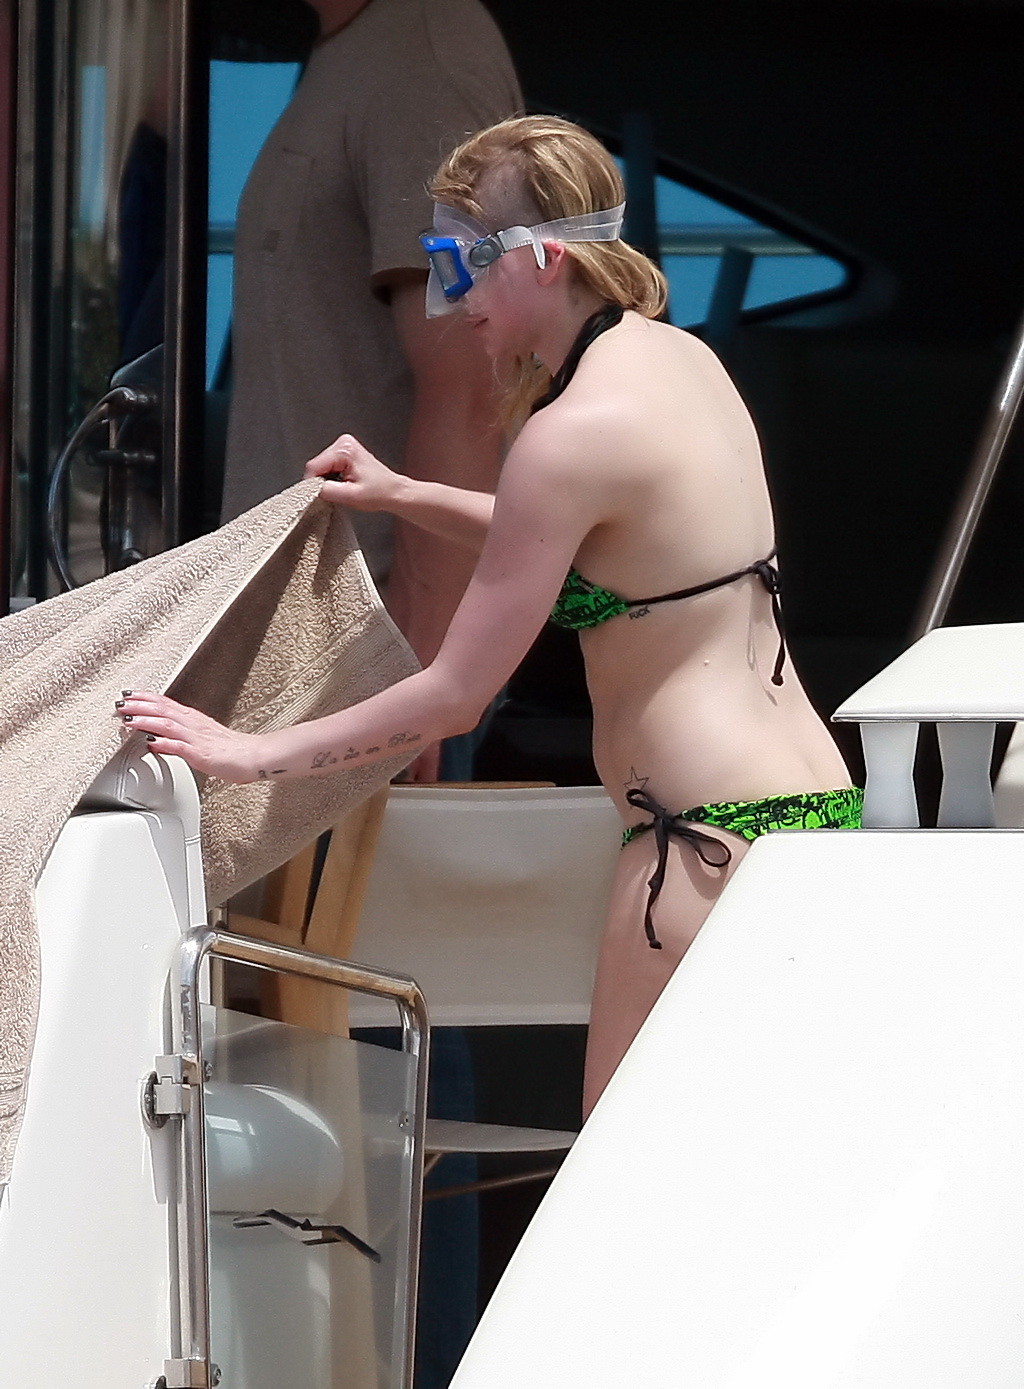 Avril Lavigne showing off her curvy body wearing skimpy green bikini while scuba